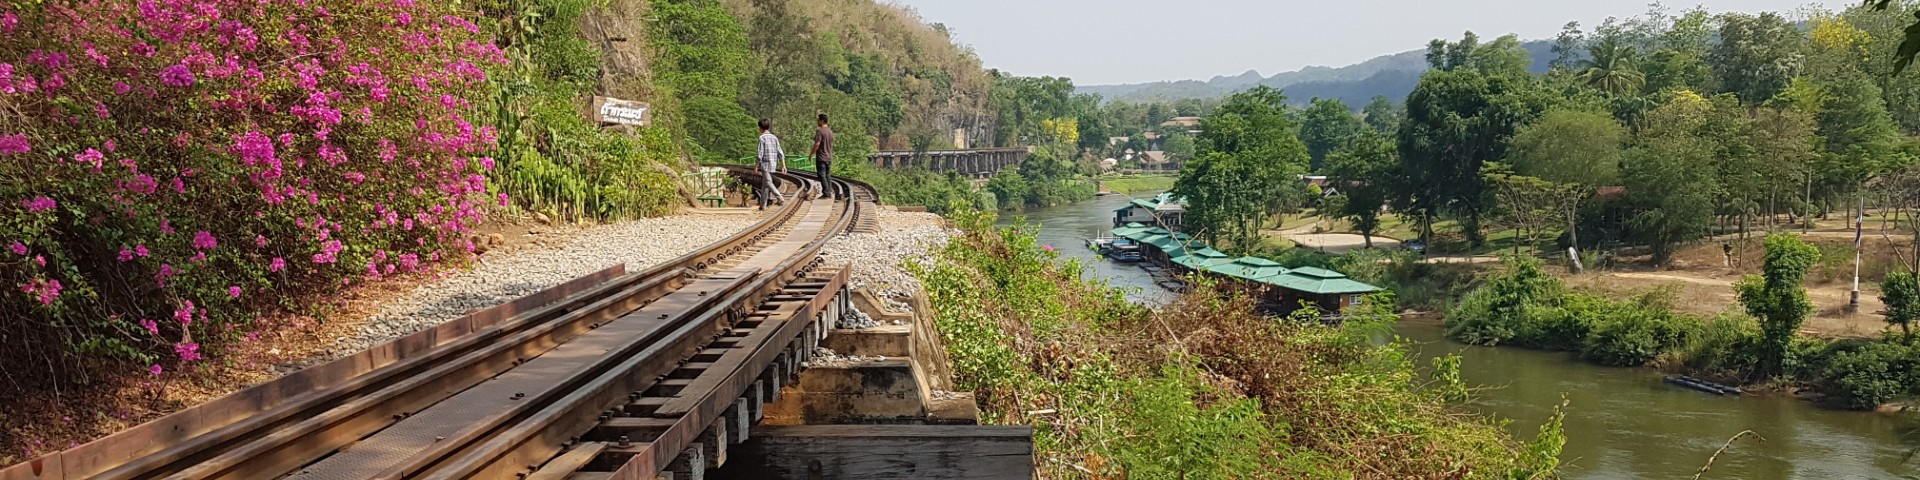 Death Railway beside the Khwae Noi River, Sai Yok District, Kanchanaburi Province